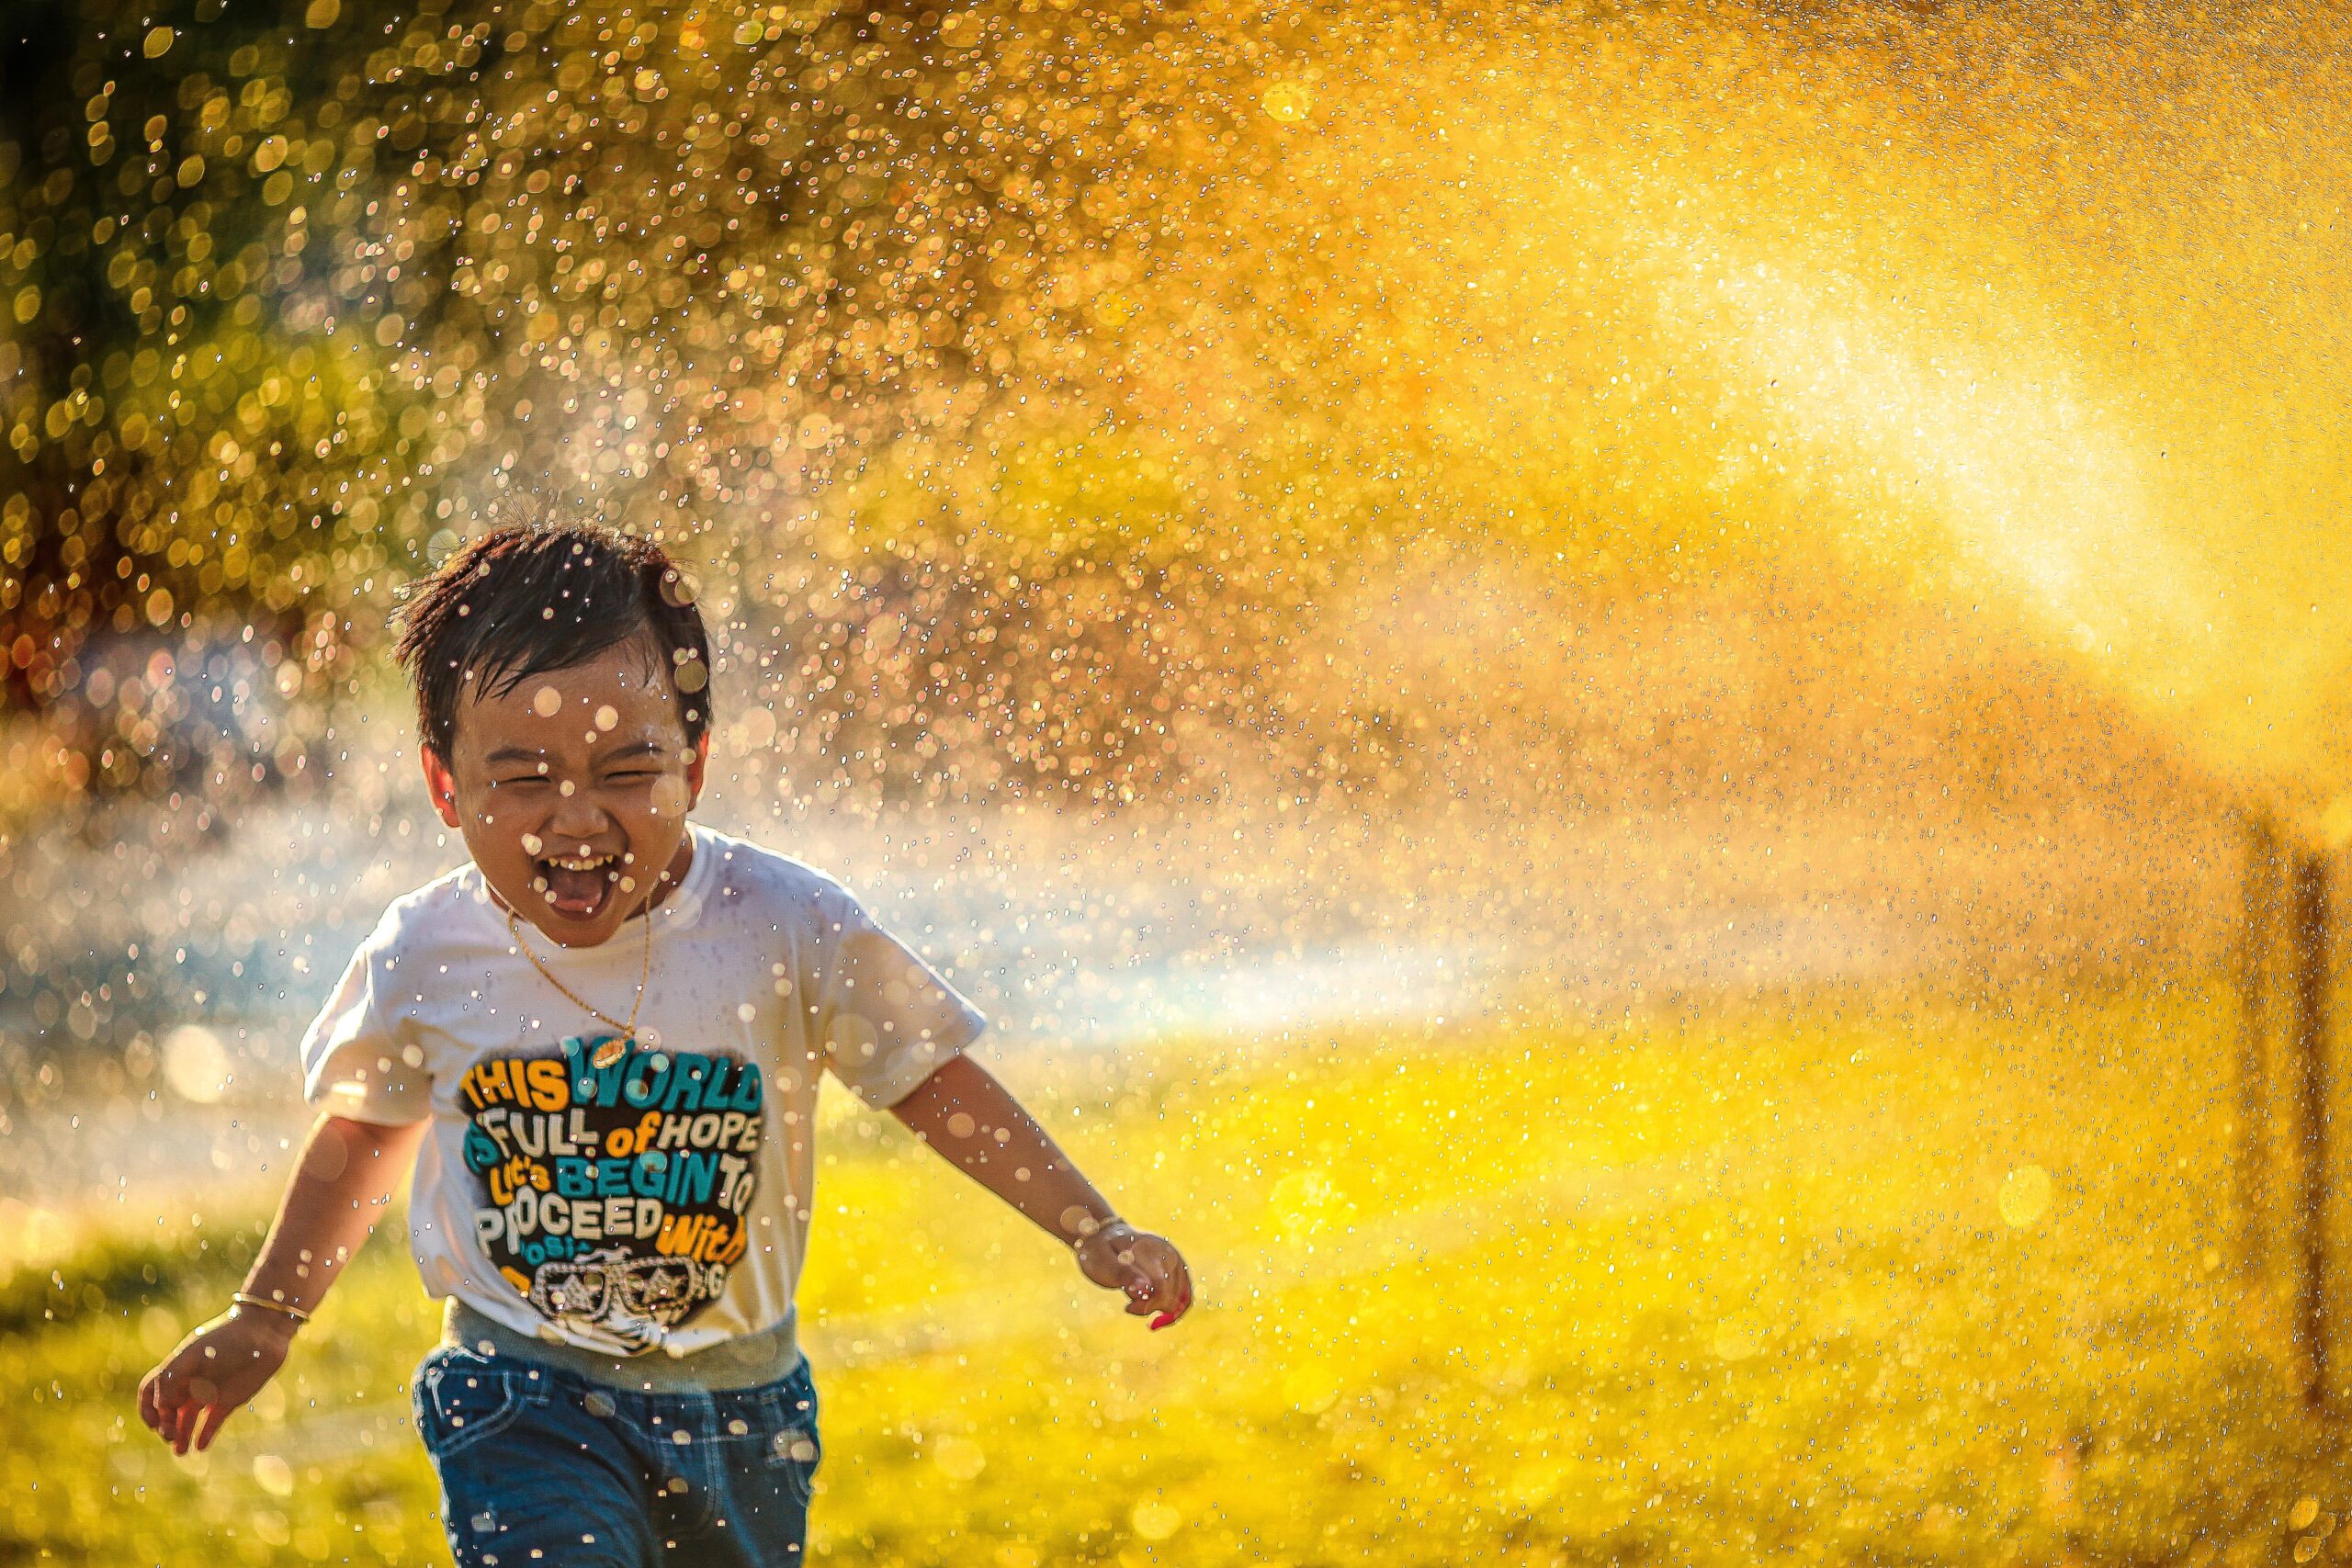 laughing child running through sprinkler Meditation hacks and wasted efforts